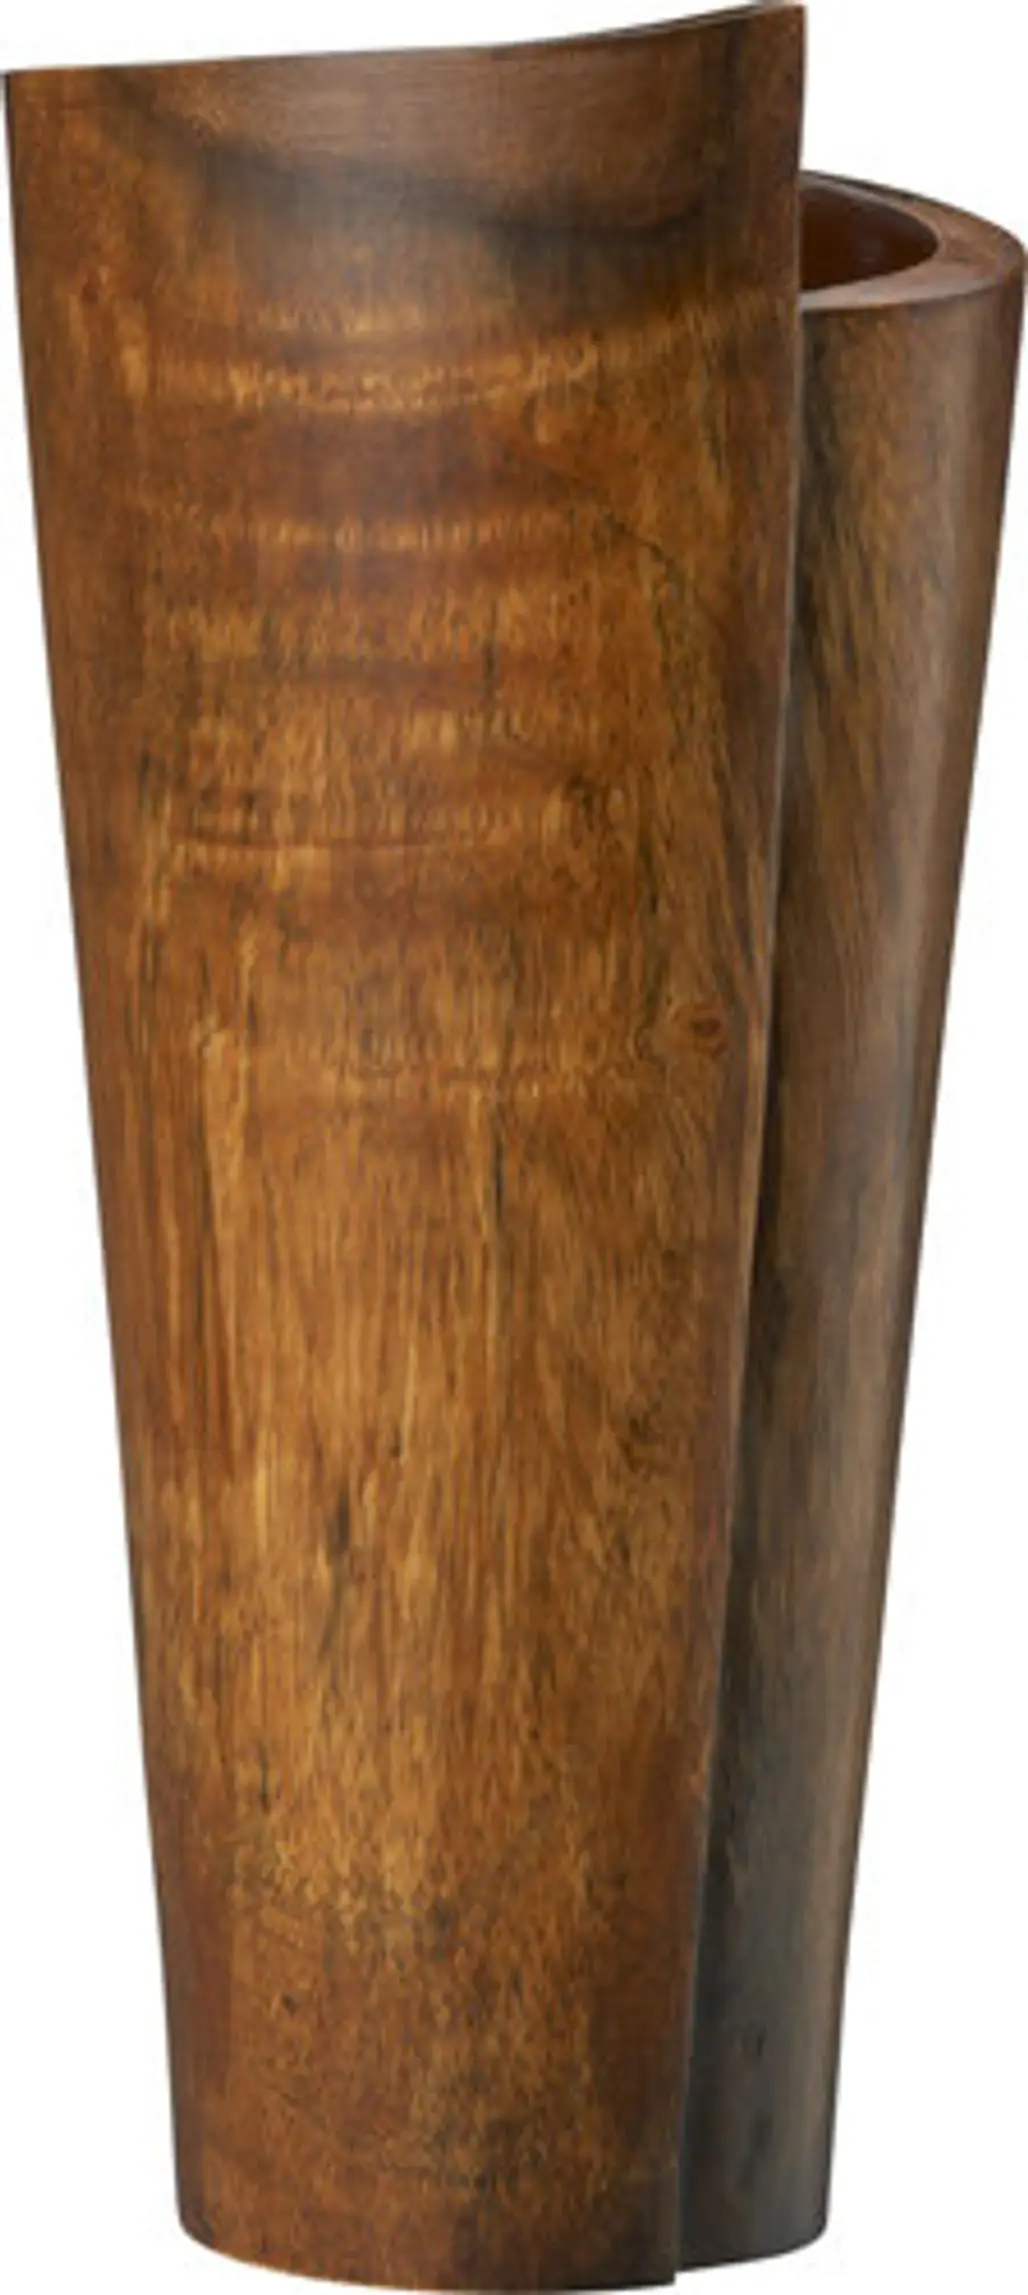 Crate and Barrel Maganda Vase